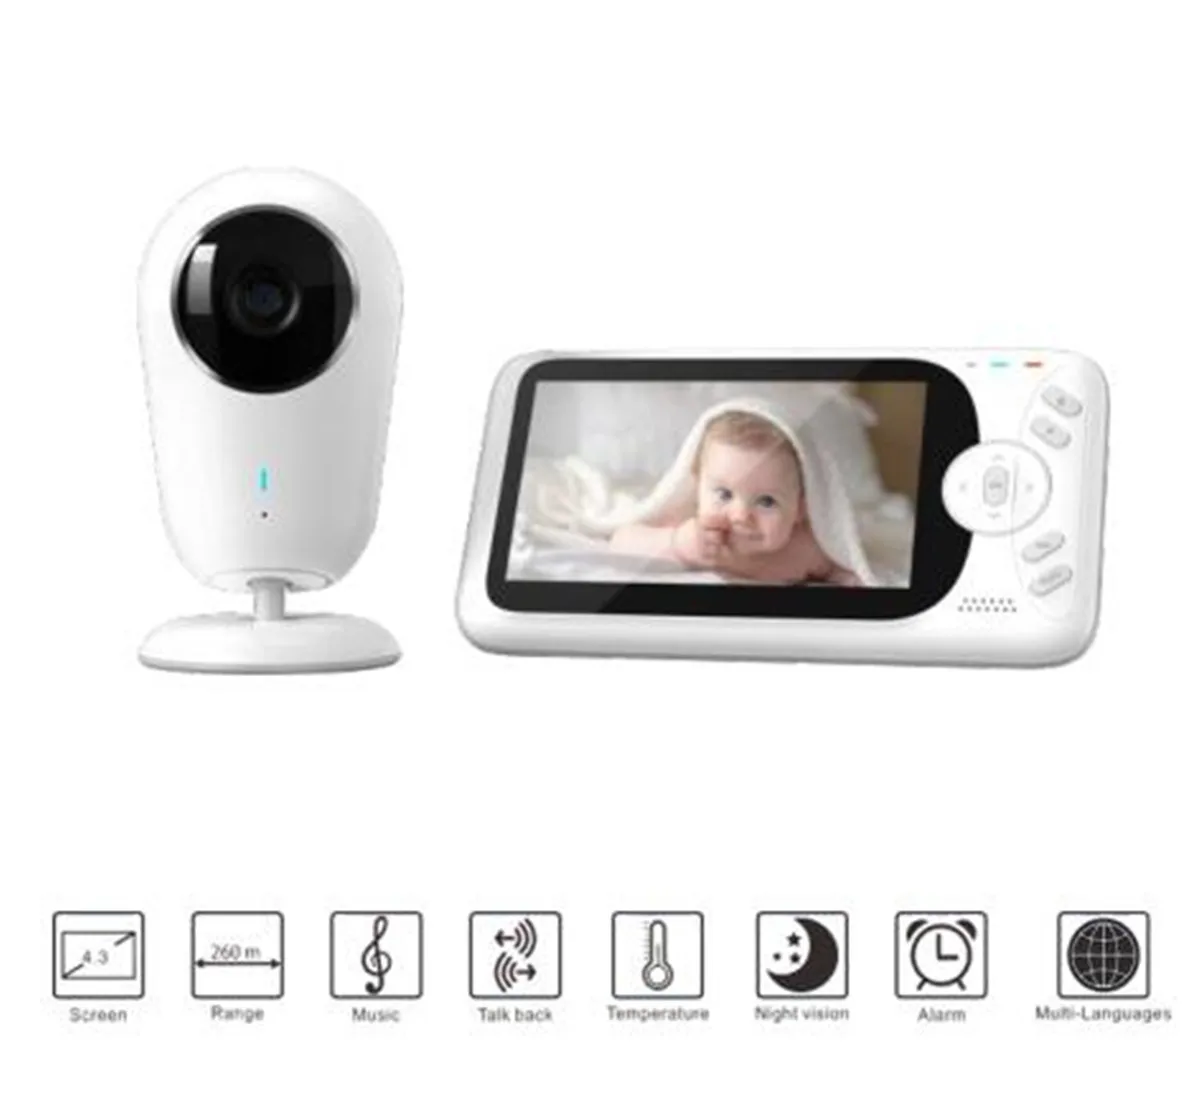 

2022 4.3inch Wireless Intercom Temperature Display Baby Monitor Night Vision Home Security CCTV Camera BabySitter